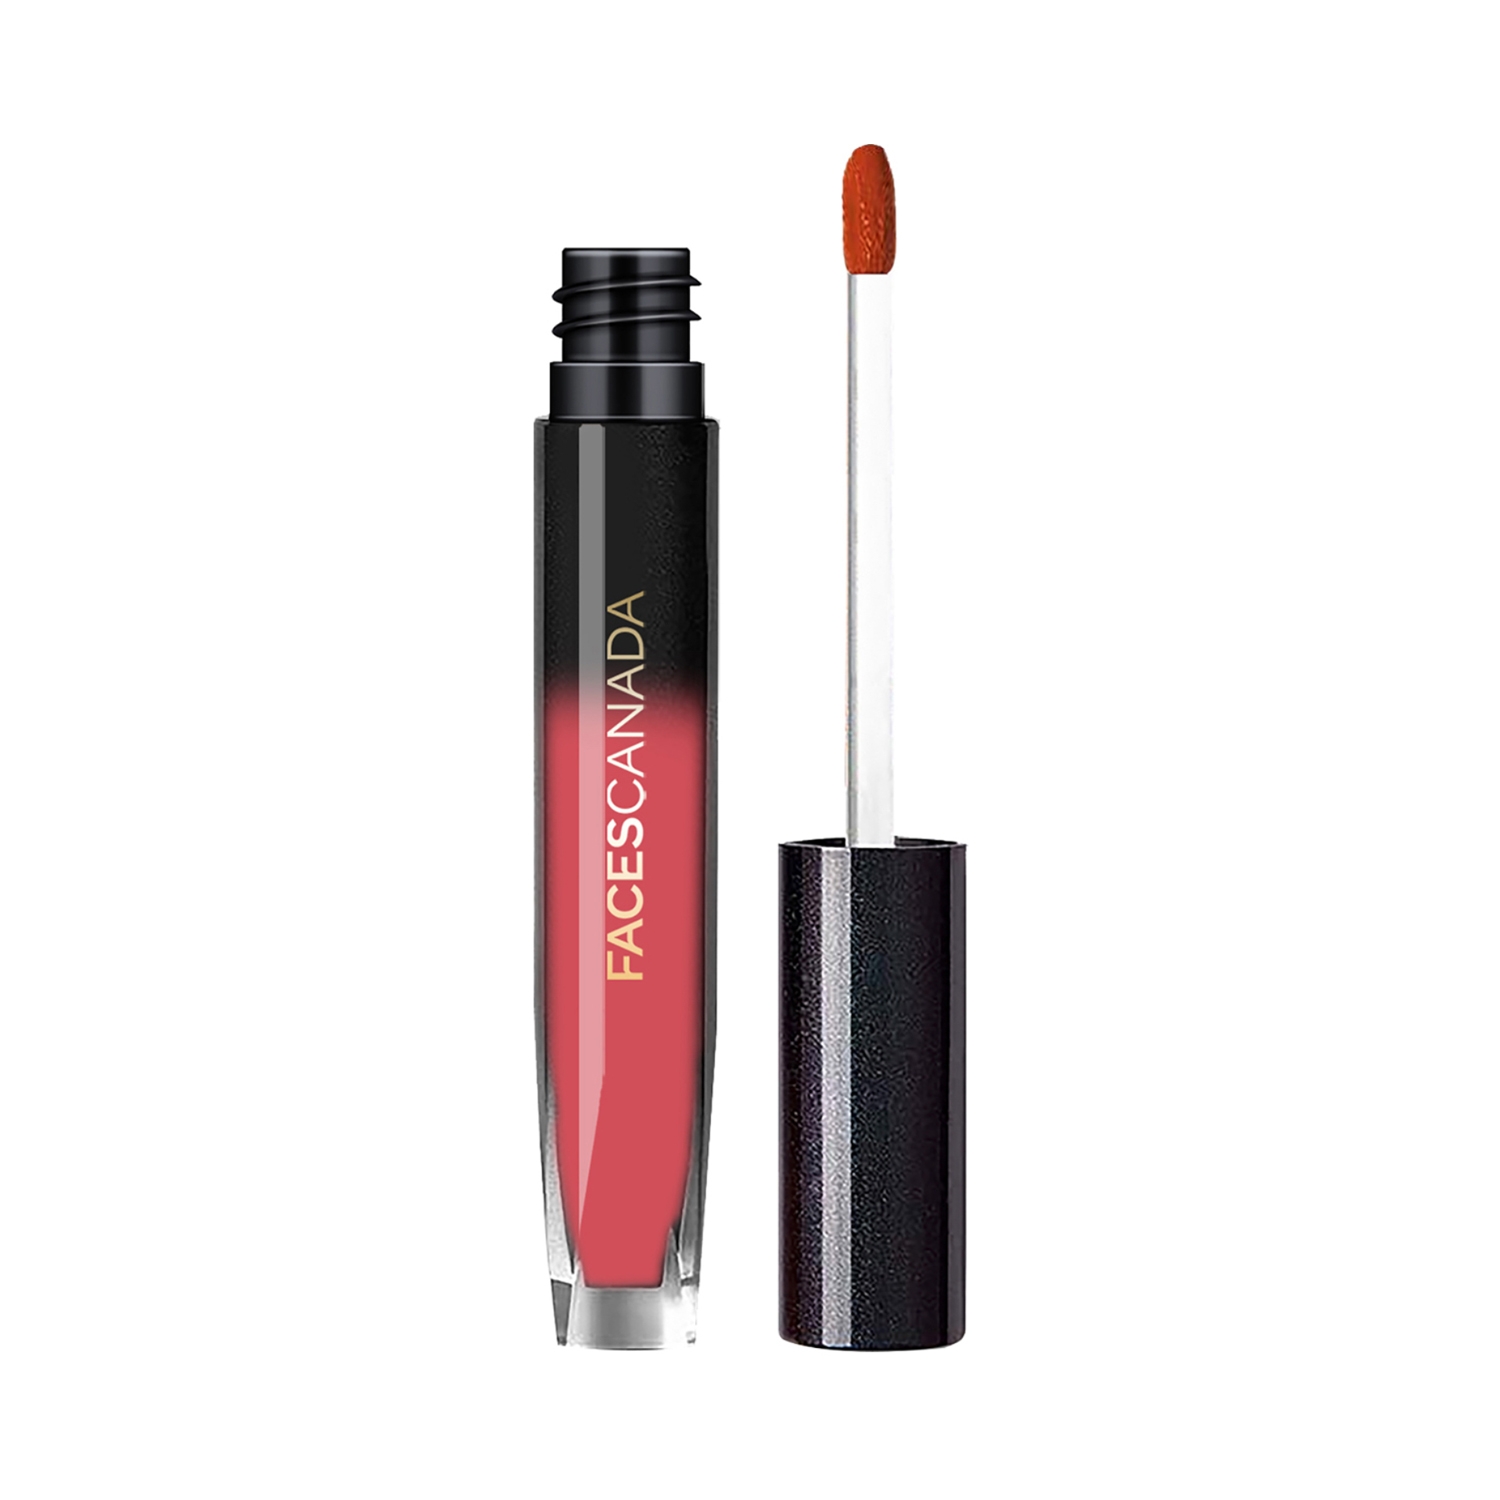 Faces Canada | Faces Canada Comfy Silk Liquid Lipstick - 09 Achiever Red (4ml)